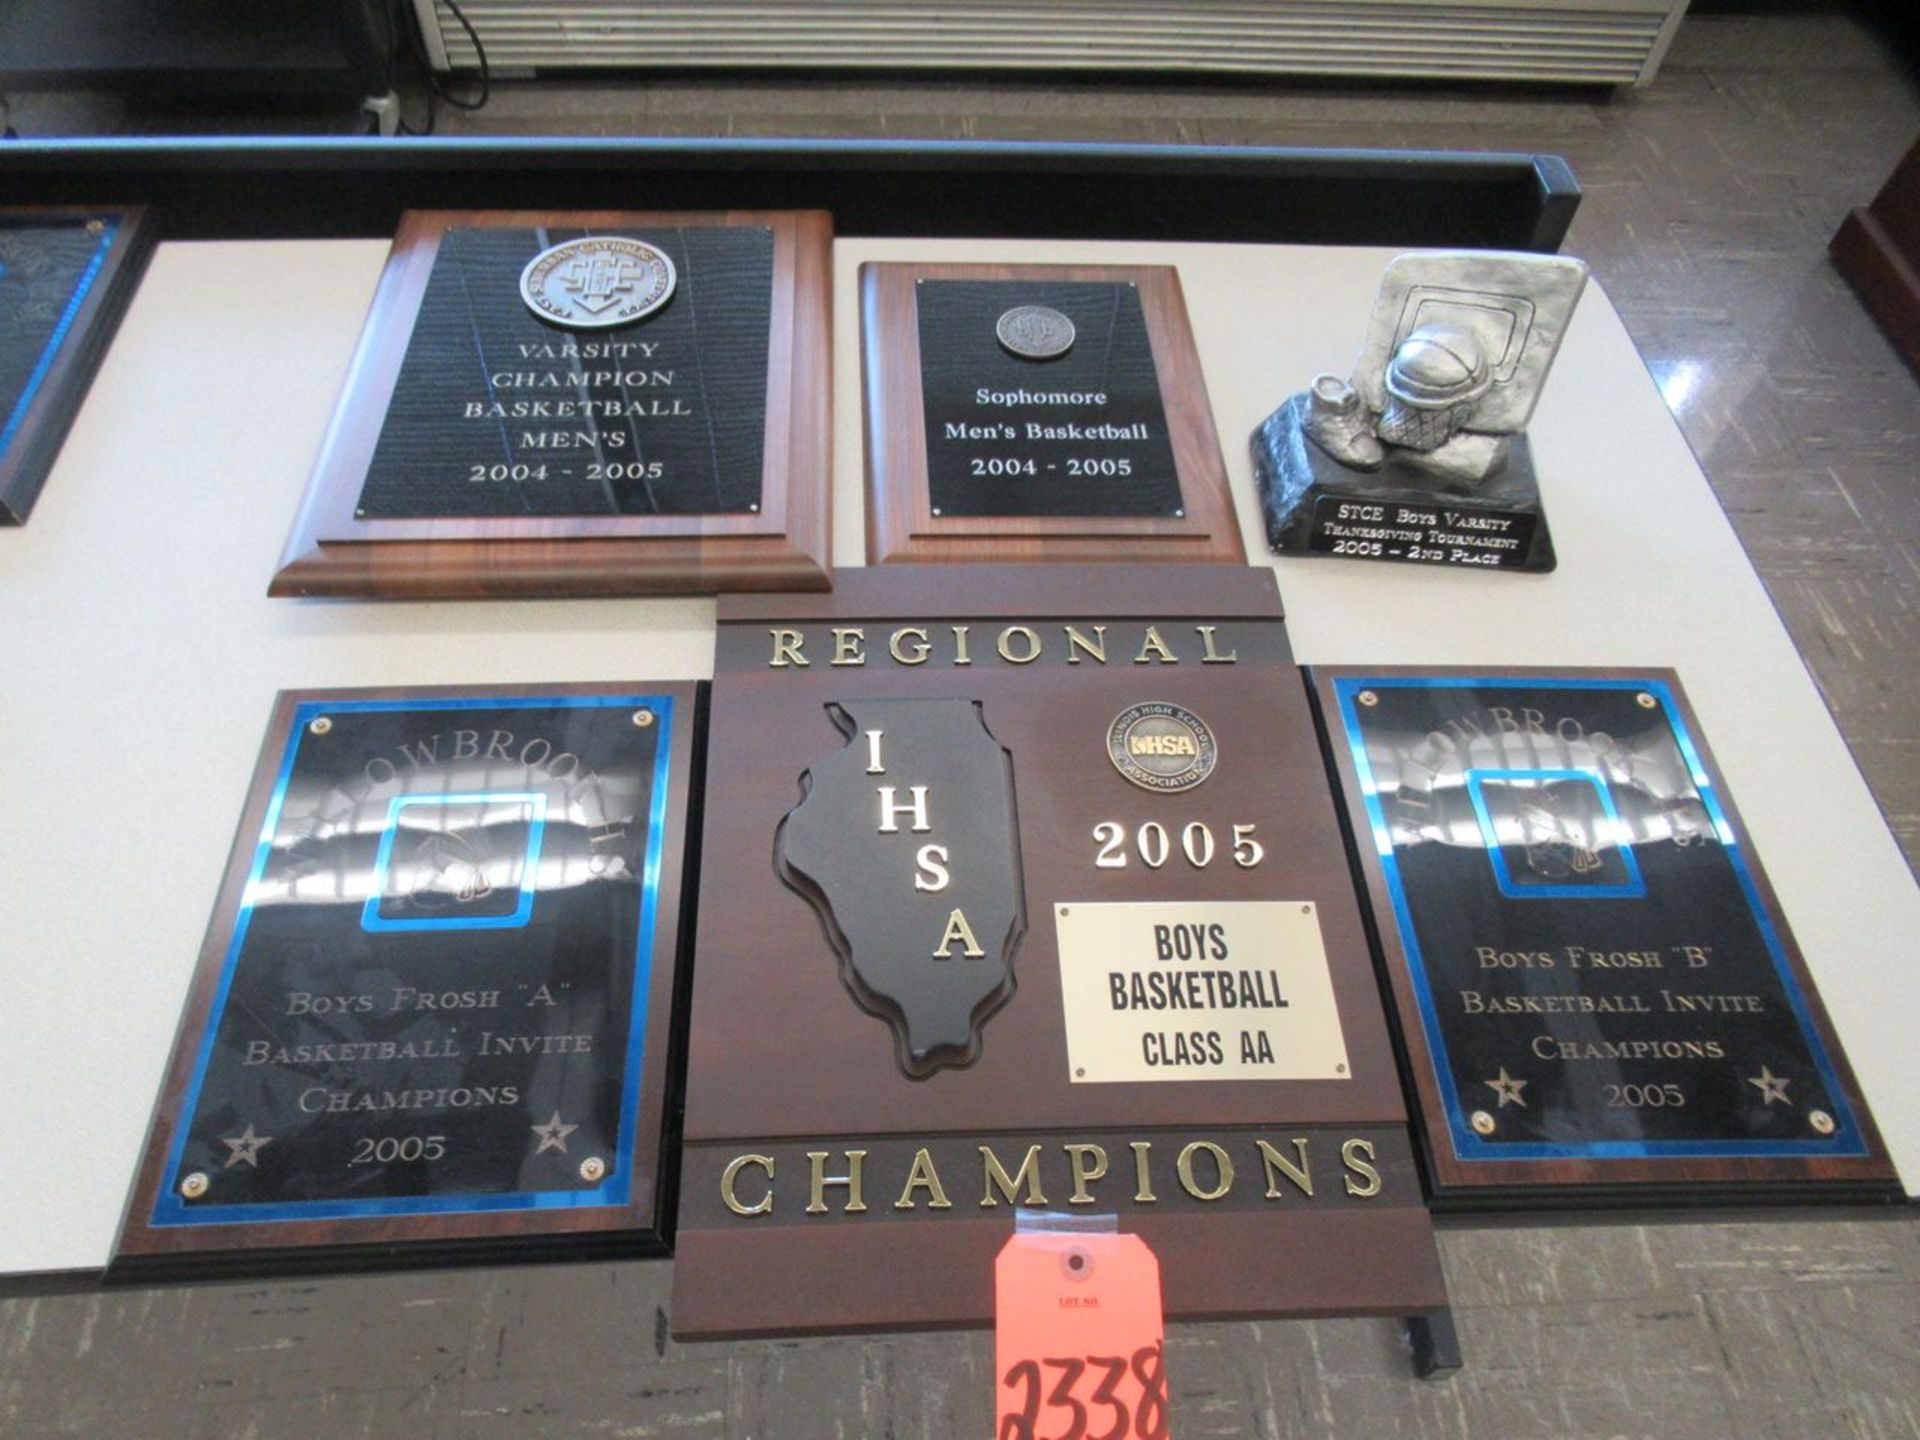 2005 IHSA Class AA State Regional Champions Plaque, 2005 STCE Boys Varsity Thanksgiving Tournament